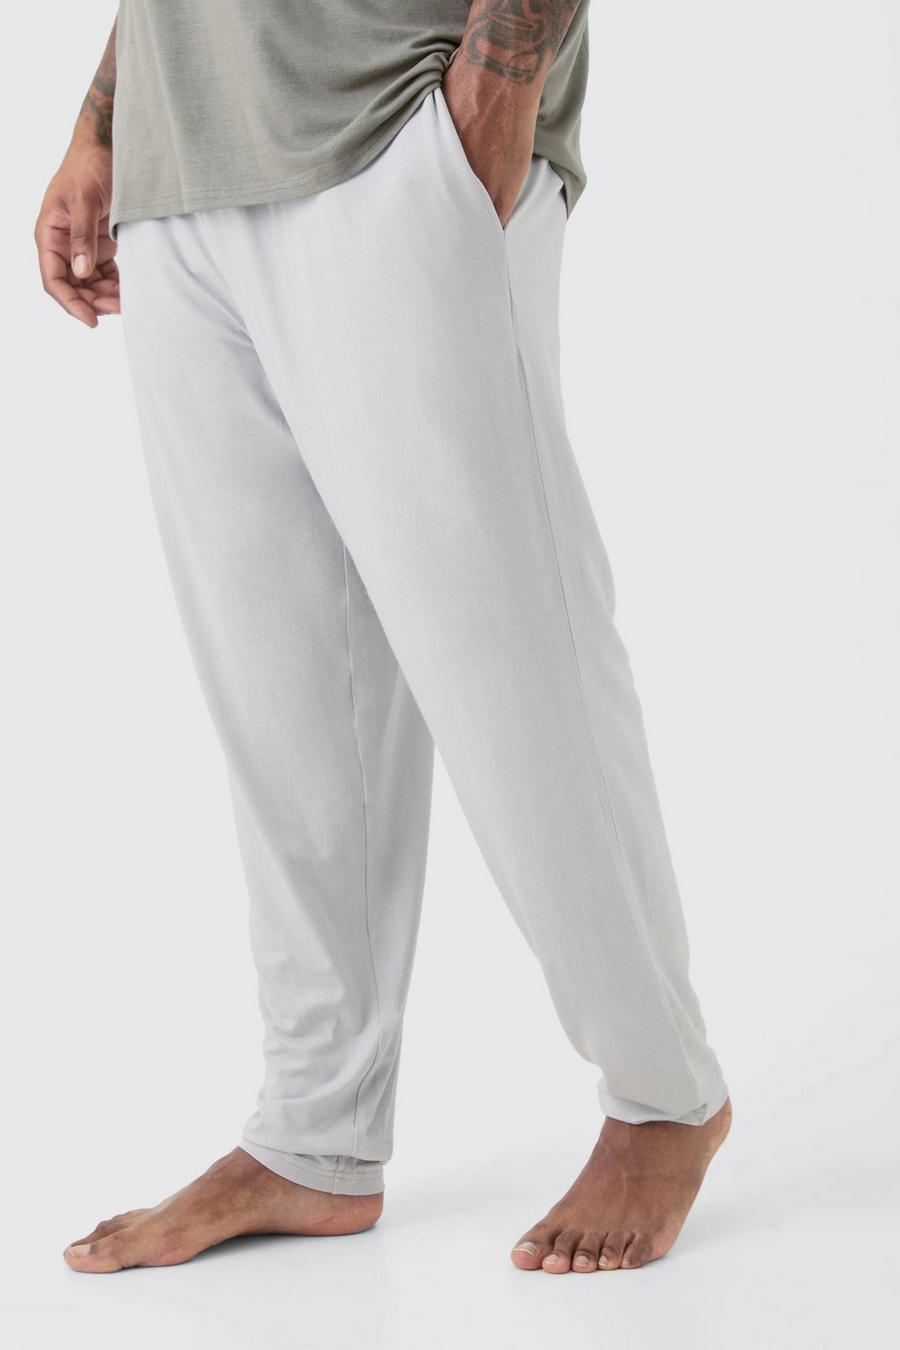 Pantaloni da casa Plus Size Premium in modal Mix rilassati, Ash grey